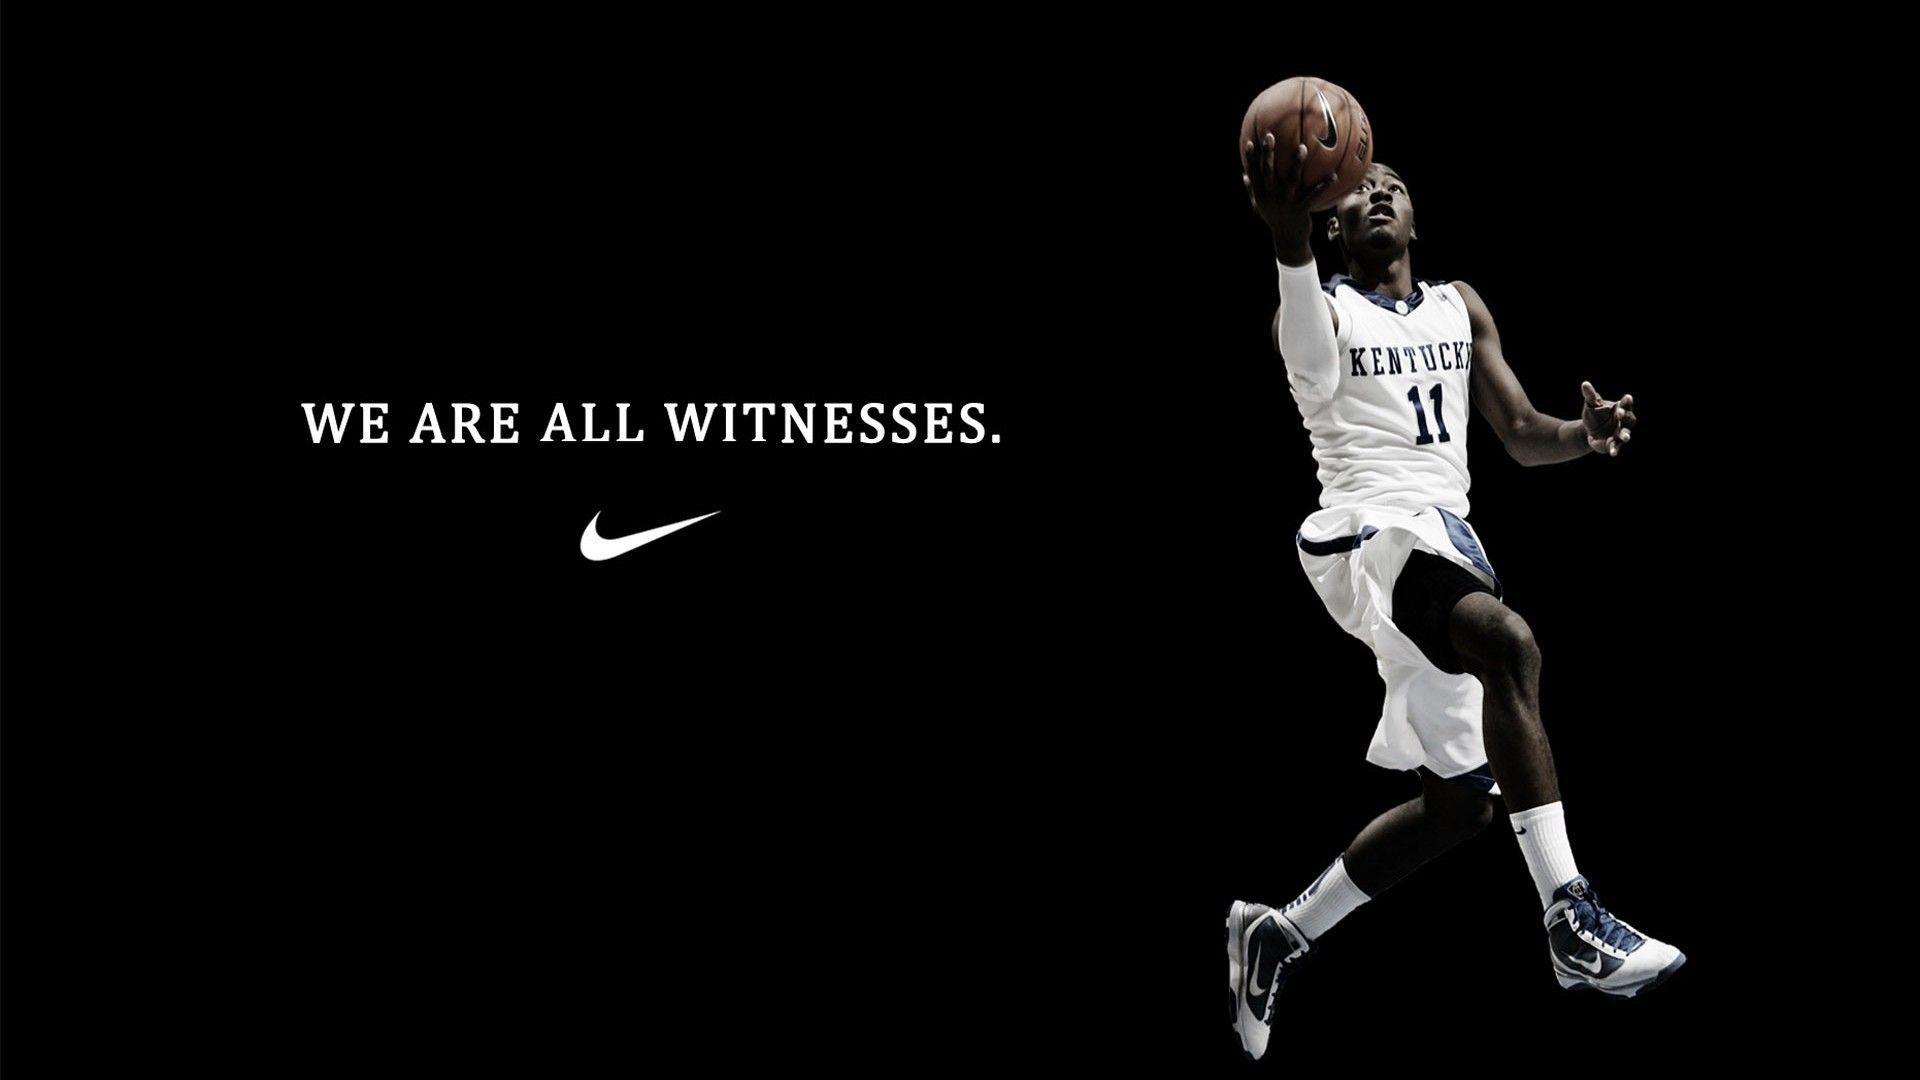 Sports Best Kobe Bryant Basketball Wallpaper for iPhone